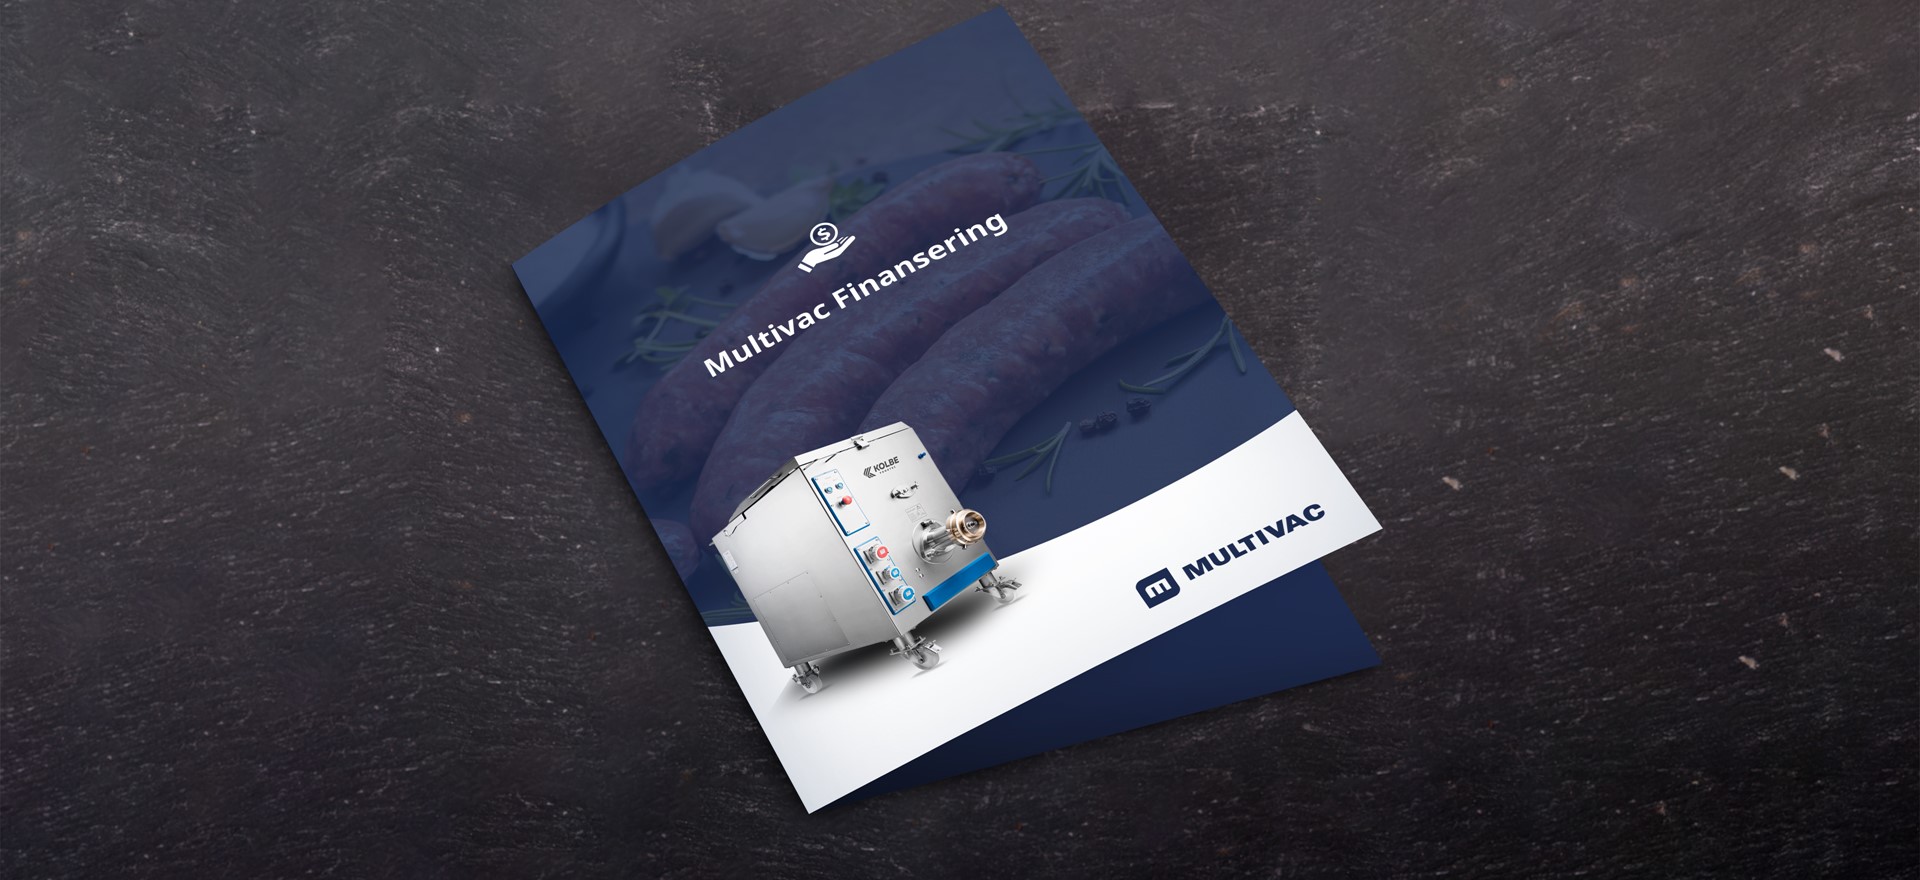 Multivac Finansering Brochure Mockup